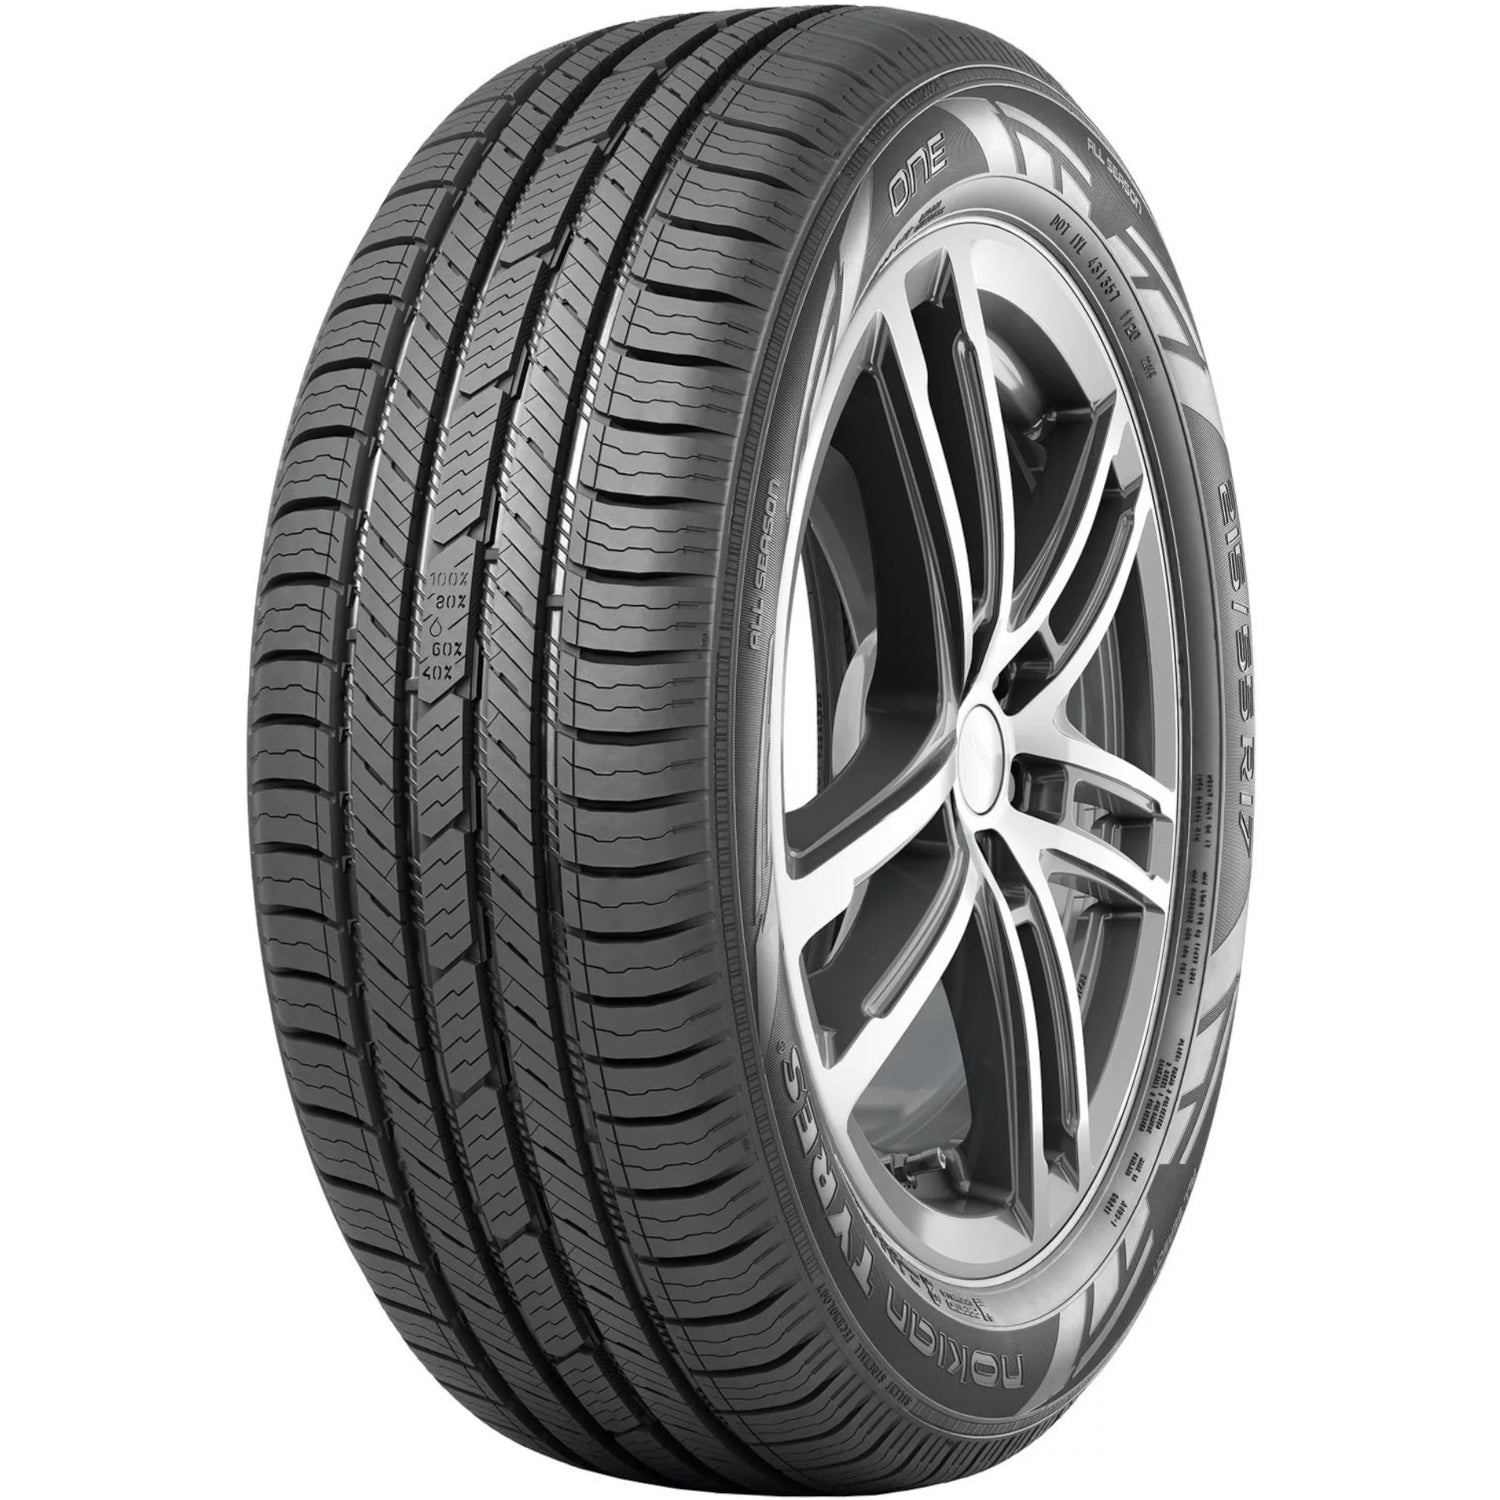 NOKIAN ONE 225/70R16 (28.4X8.9R 16) Tires